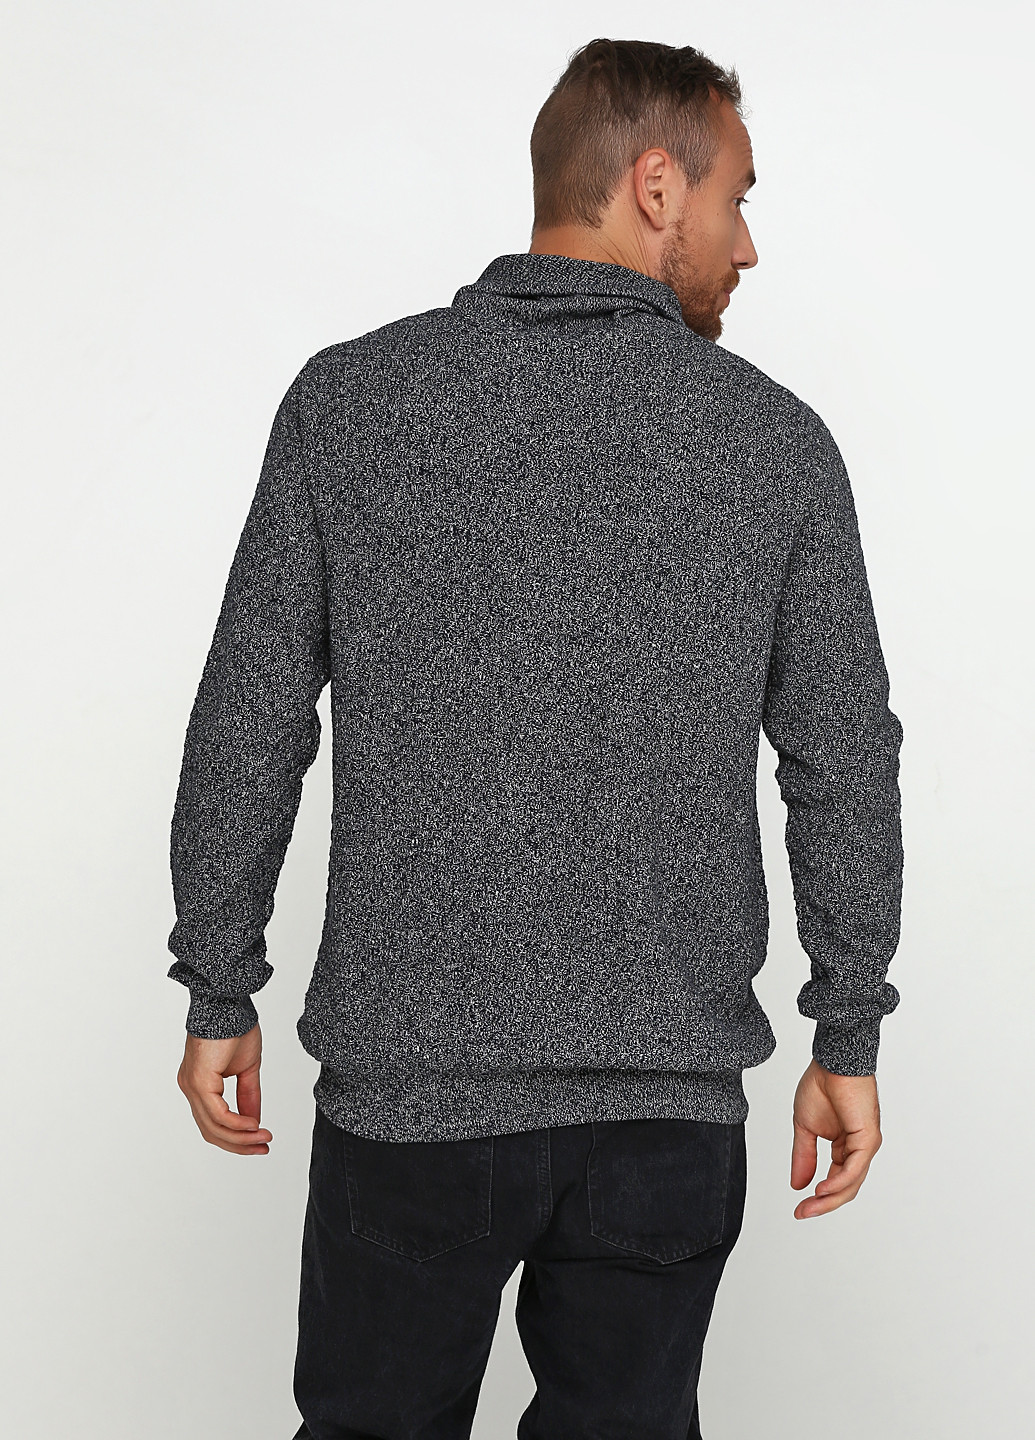 Грифельно-серый демисезонный свитер Springfield